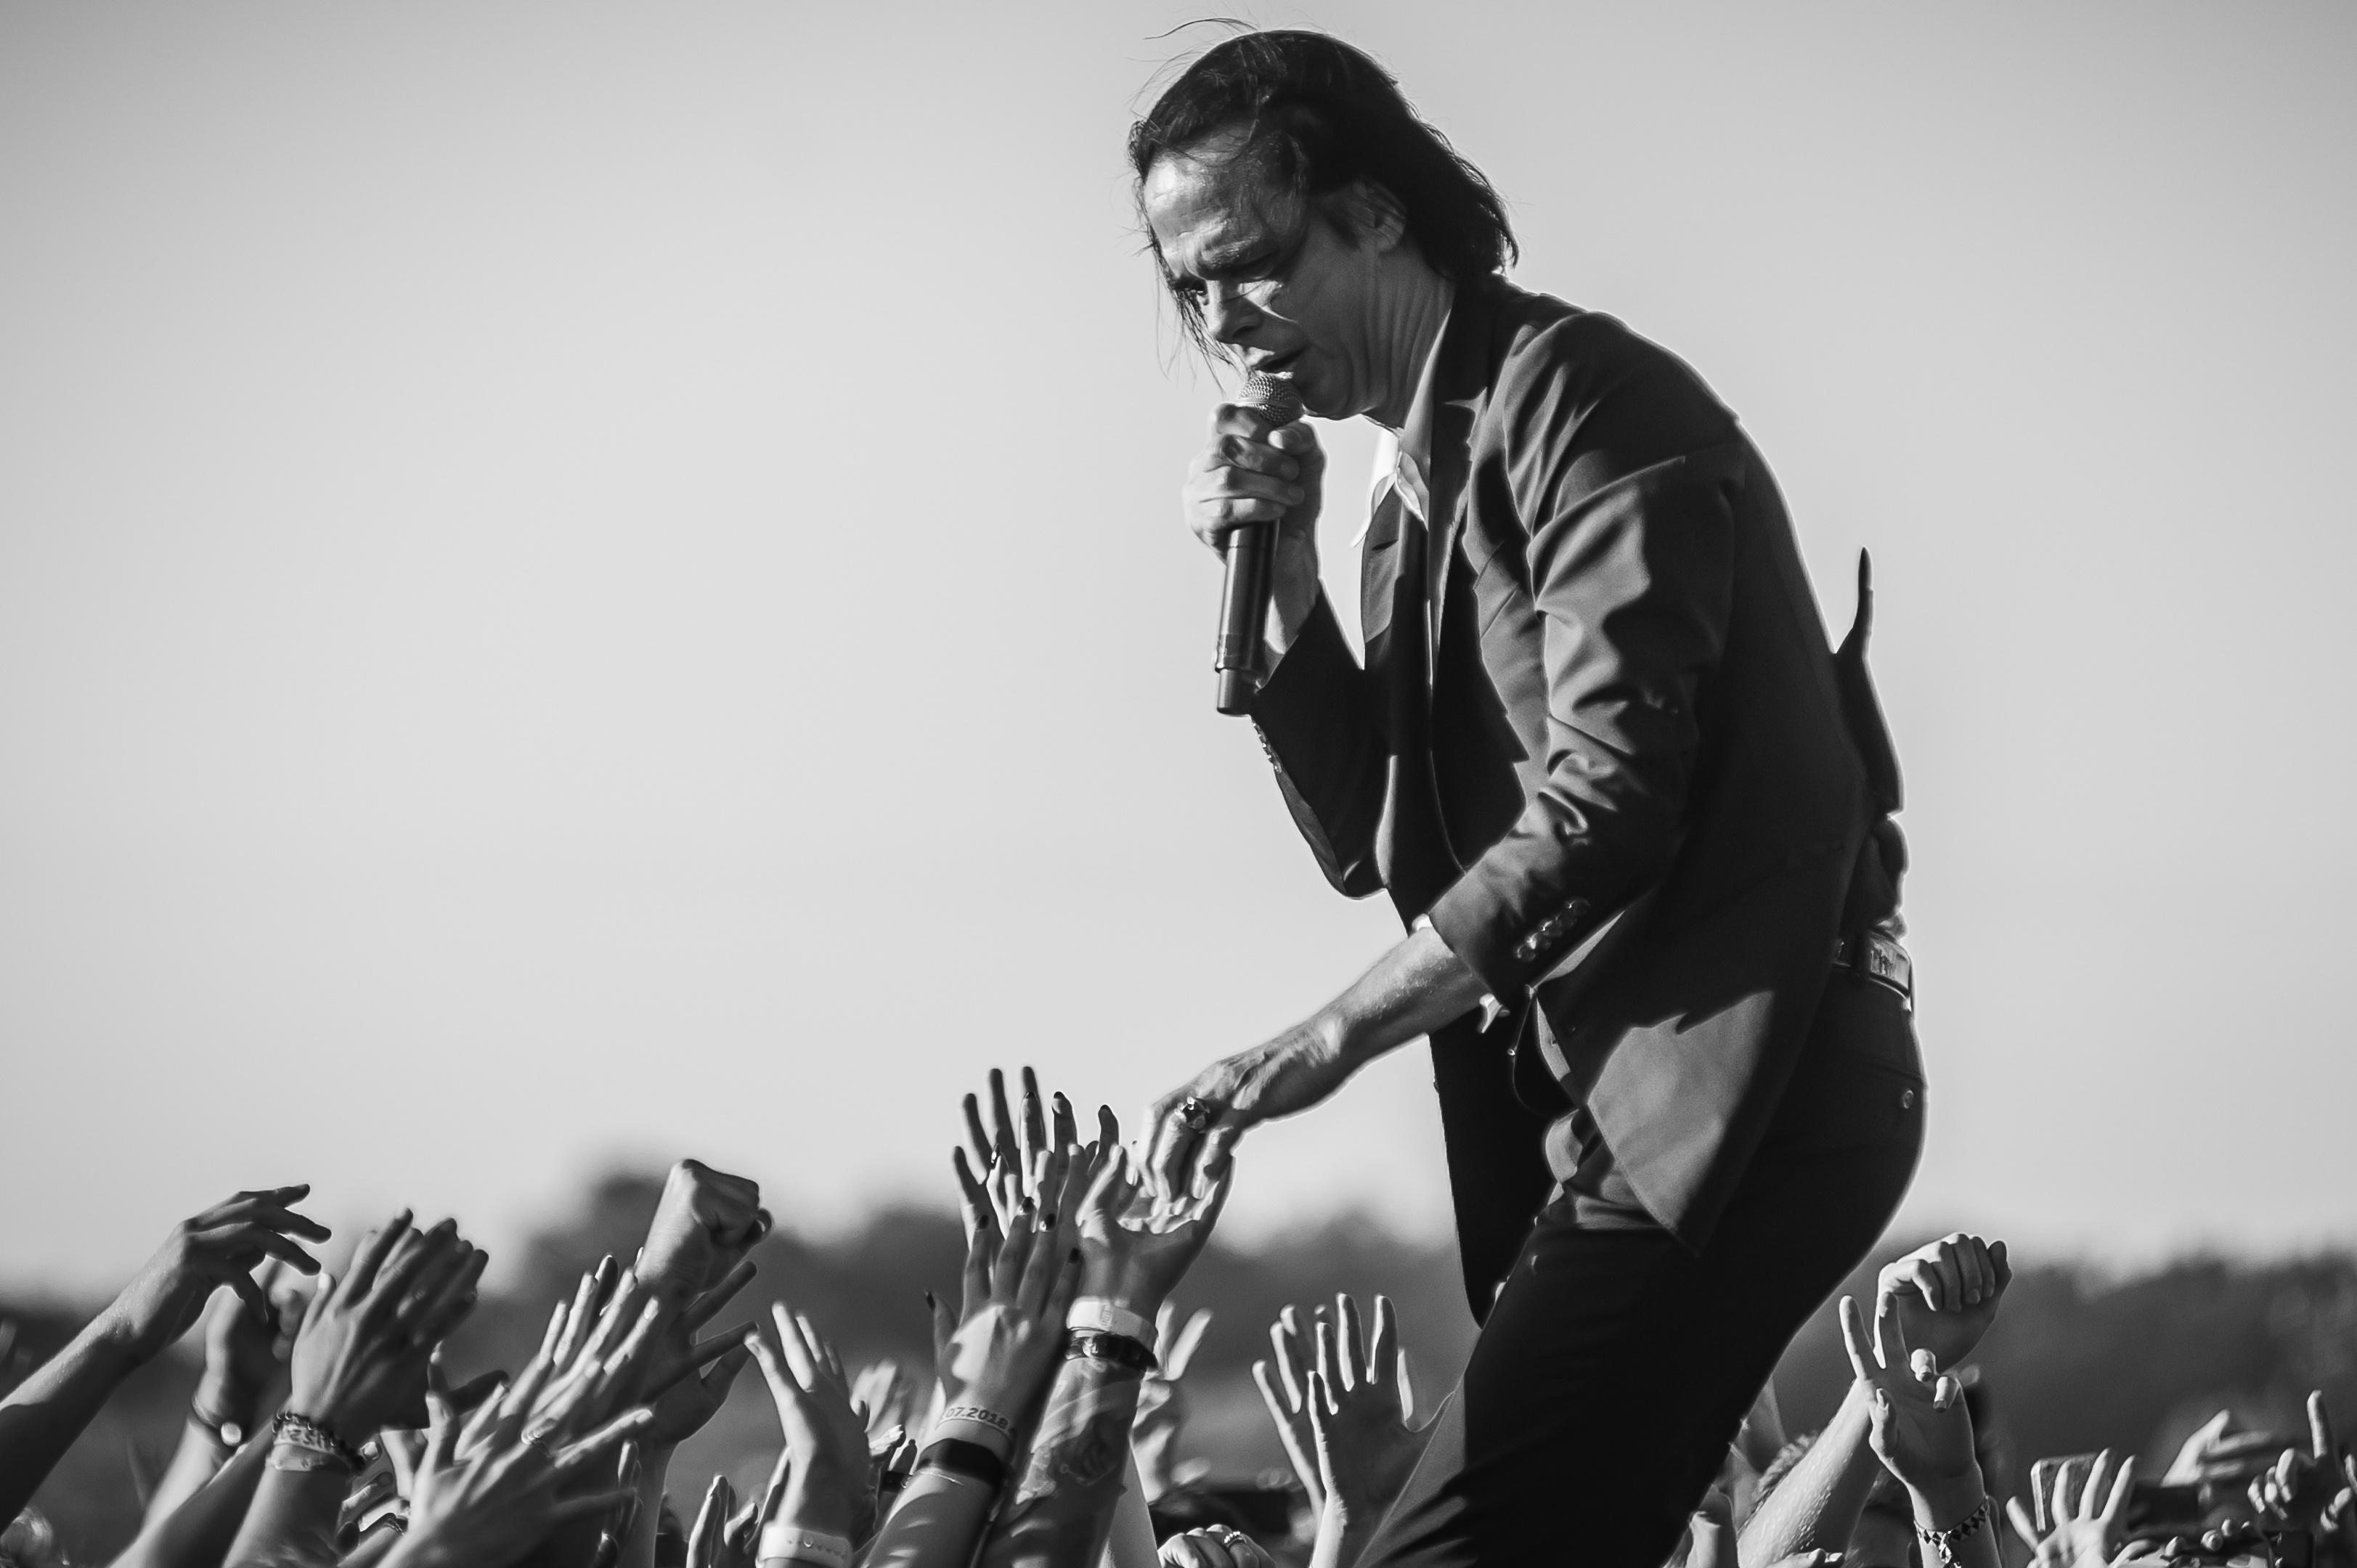 Nick Cave & The Bad Seeds perform at Open’er Festival on  4 July 2018 in Gdynia, Poland  (Ewa Burdynska-Michnam, East News sp. z o.o. Alamy Stock Photo)